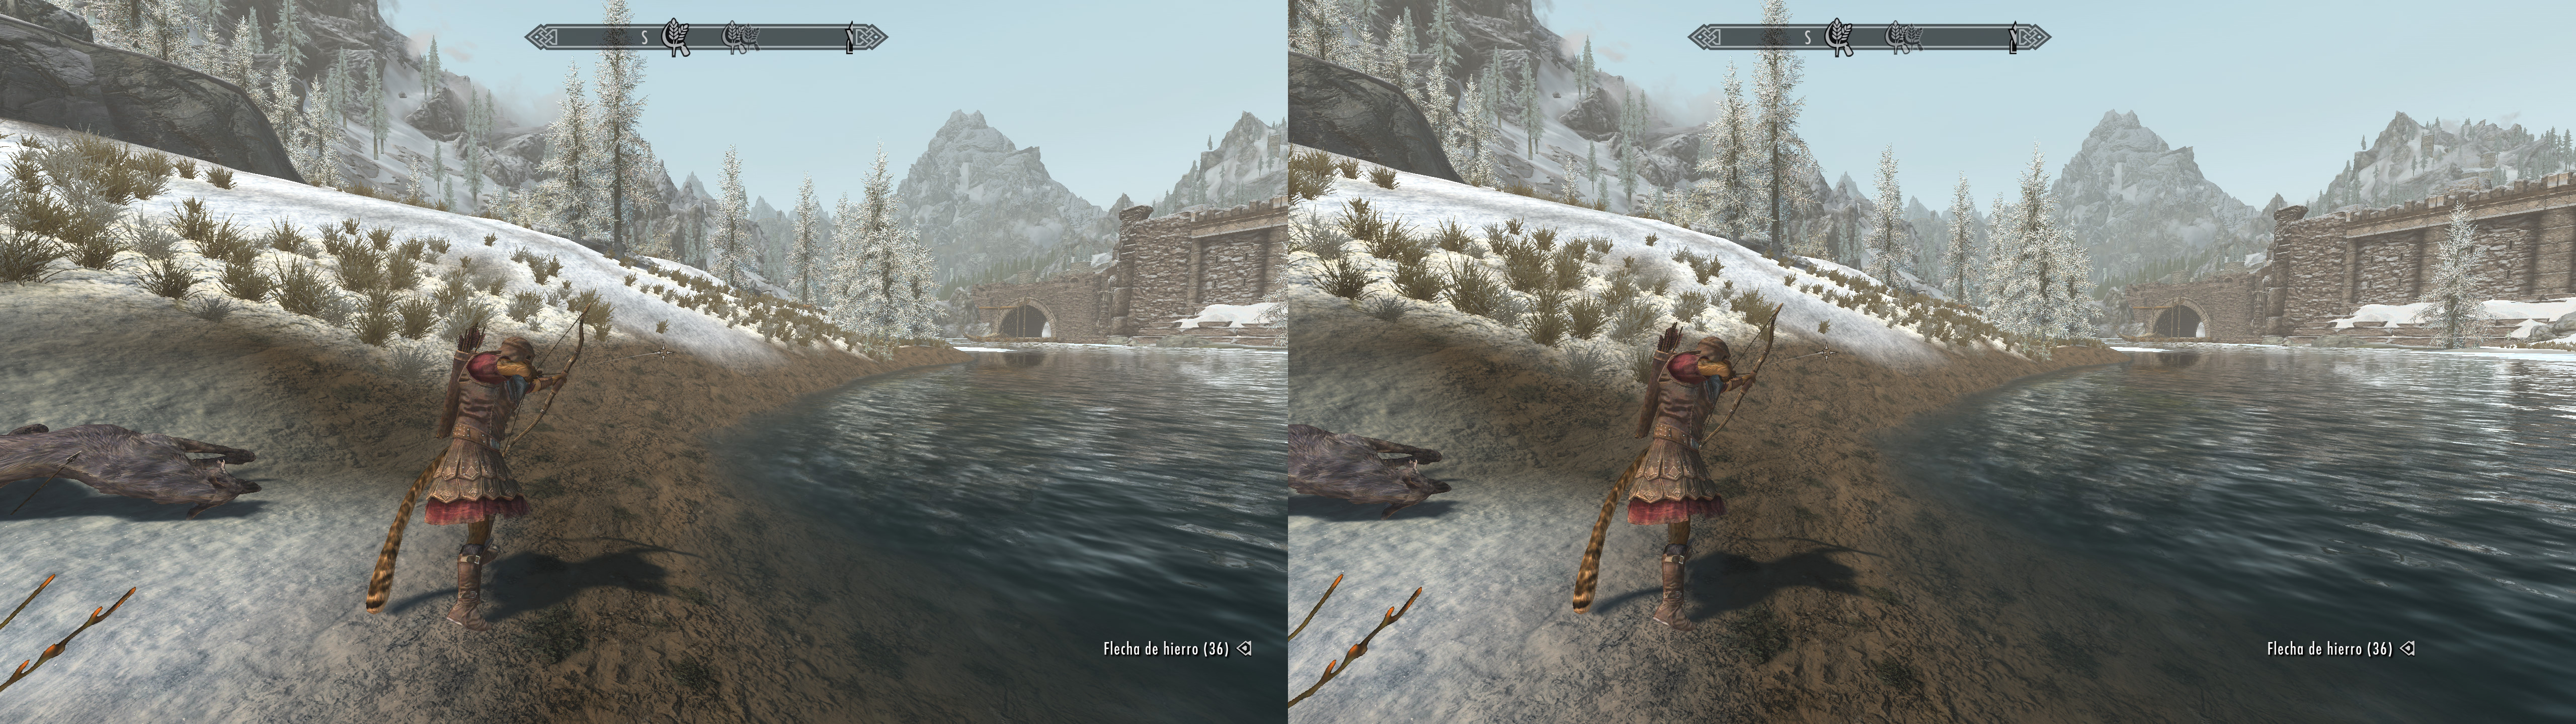 Dark Souls II GAME MOD Realistique Shadow Reshade v.1.0 - download